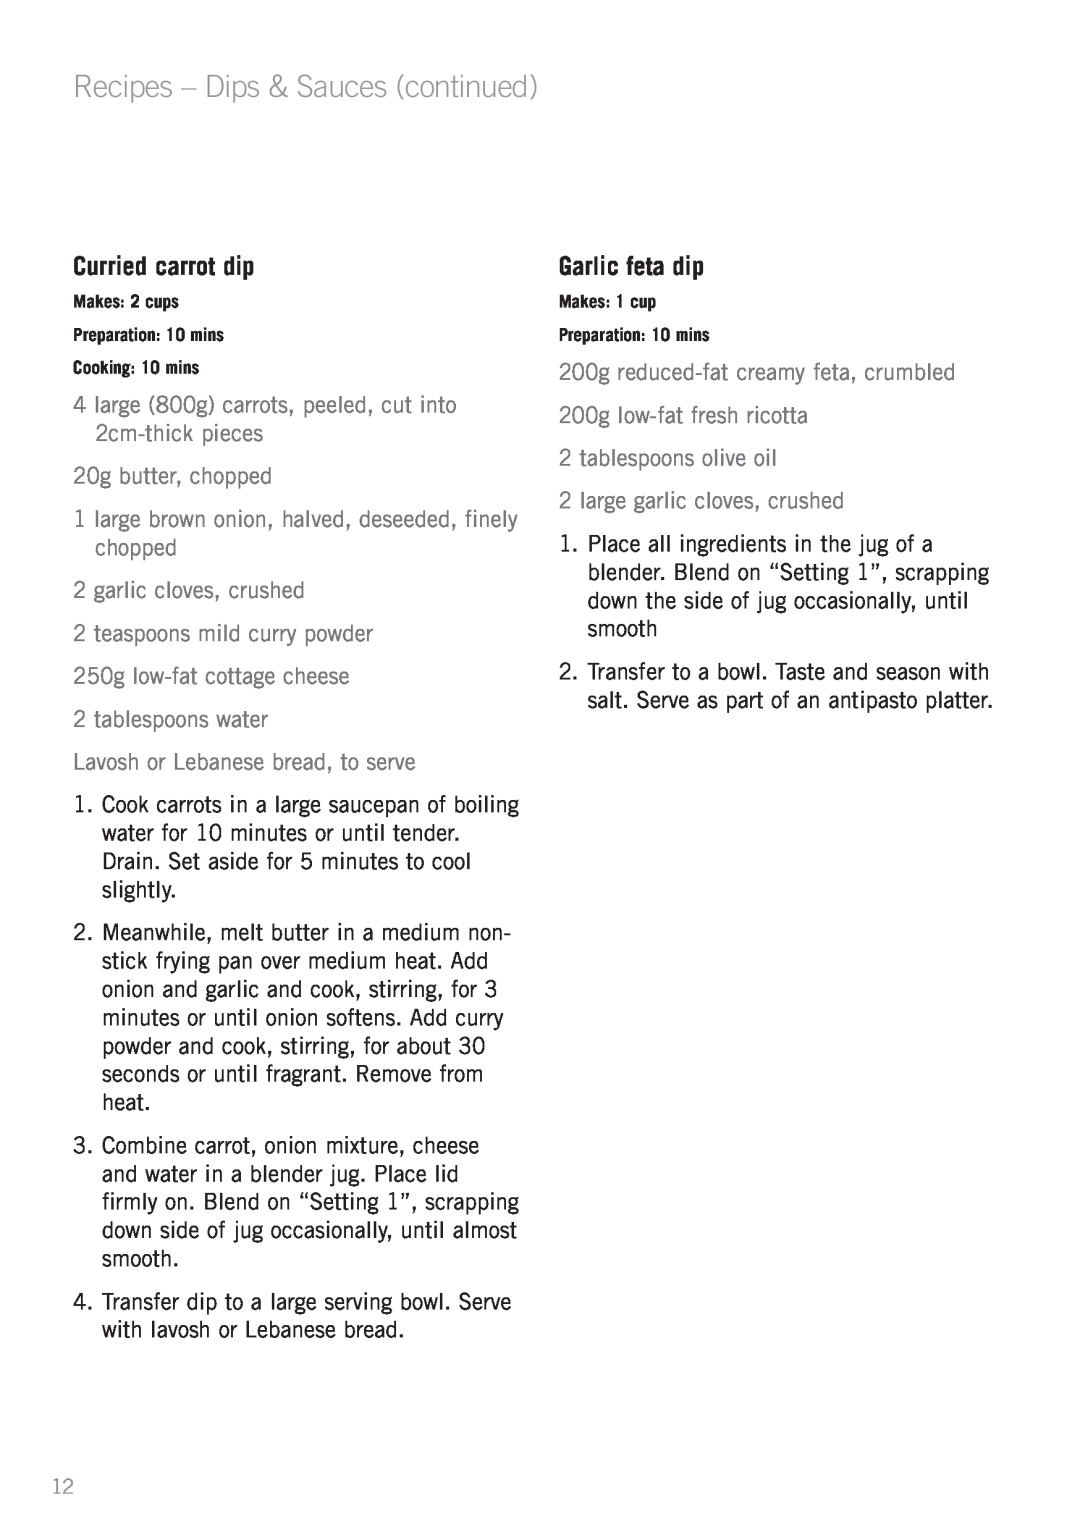 Sunbeam PB7650 manual Recipes - Dips & Sauces continued, Curried carrot dip, Garlic feta dip, 20g butter, chopped 